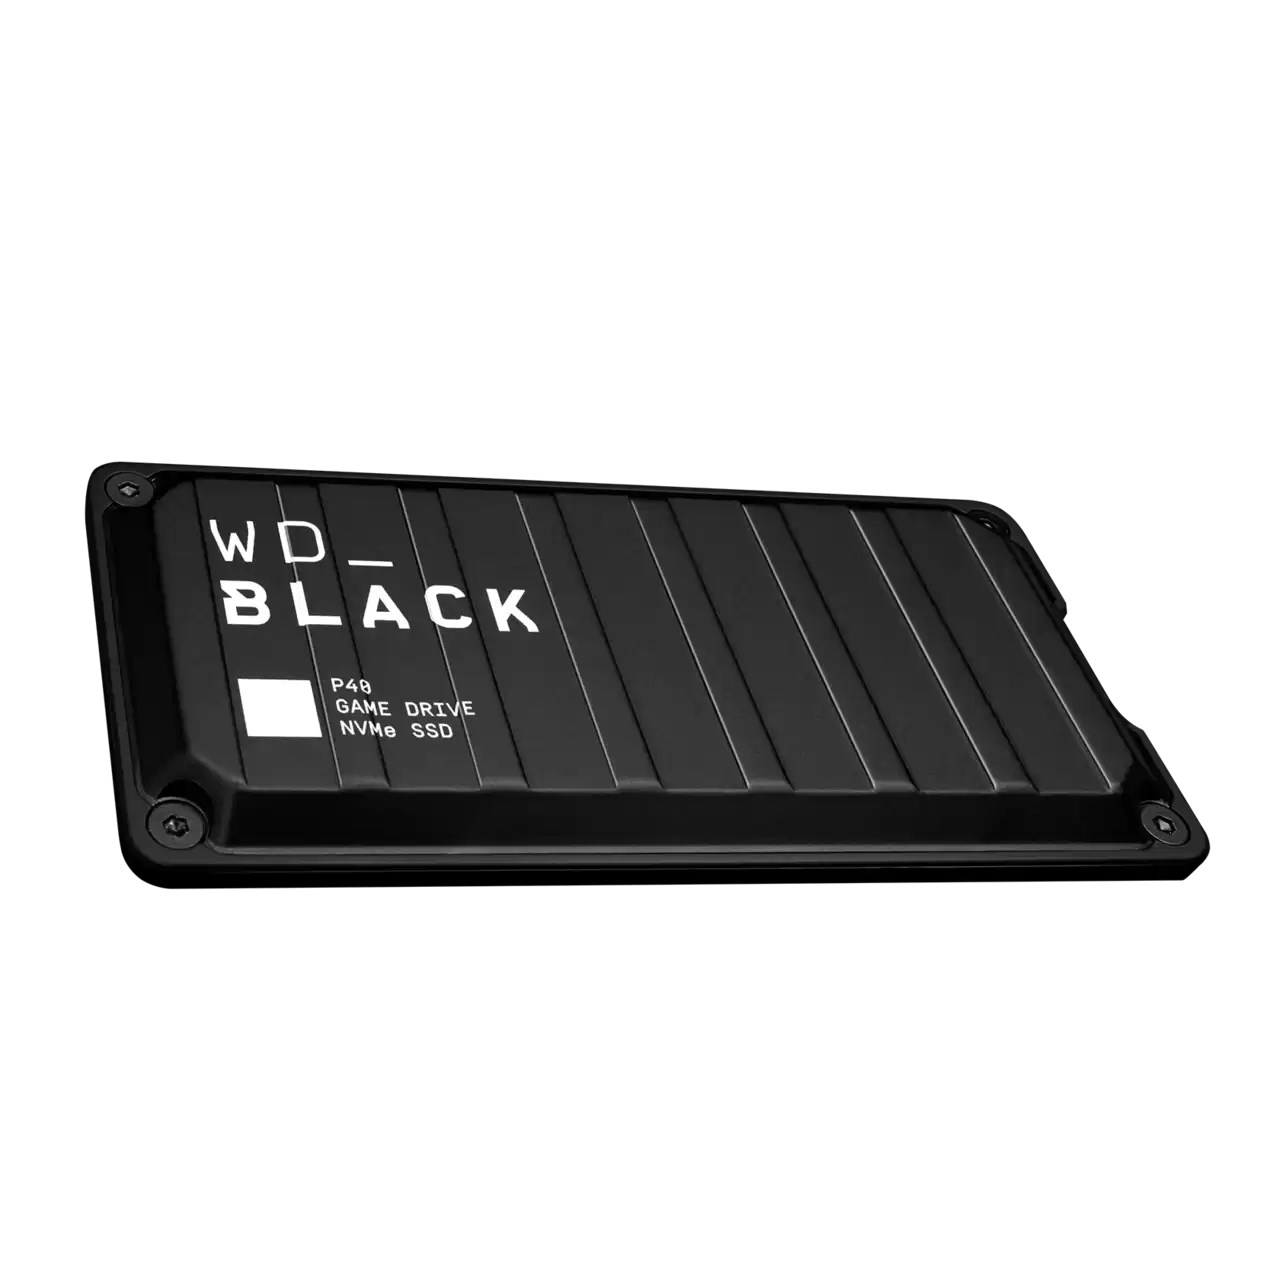 SanDisk externí SSD 500GB WD BLACK P40 Game Drive0 